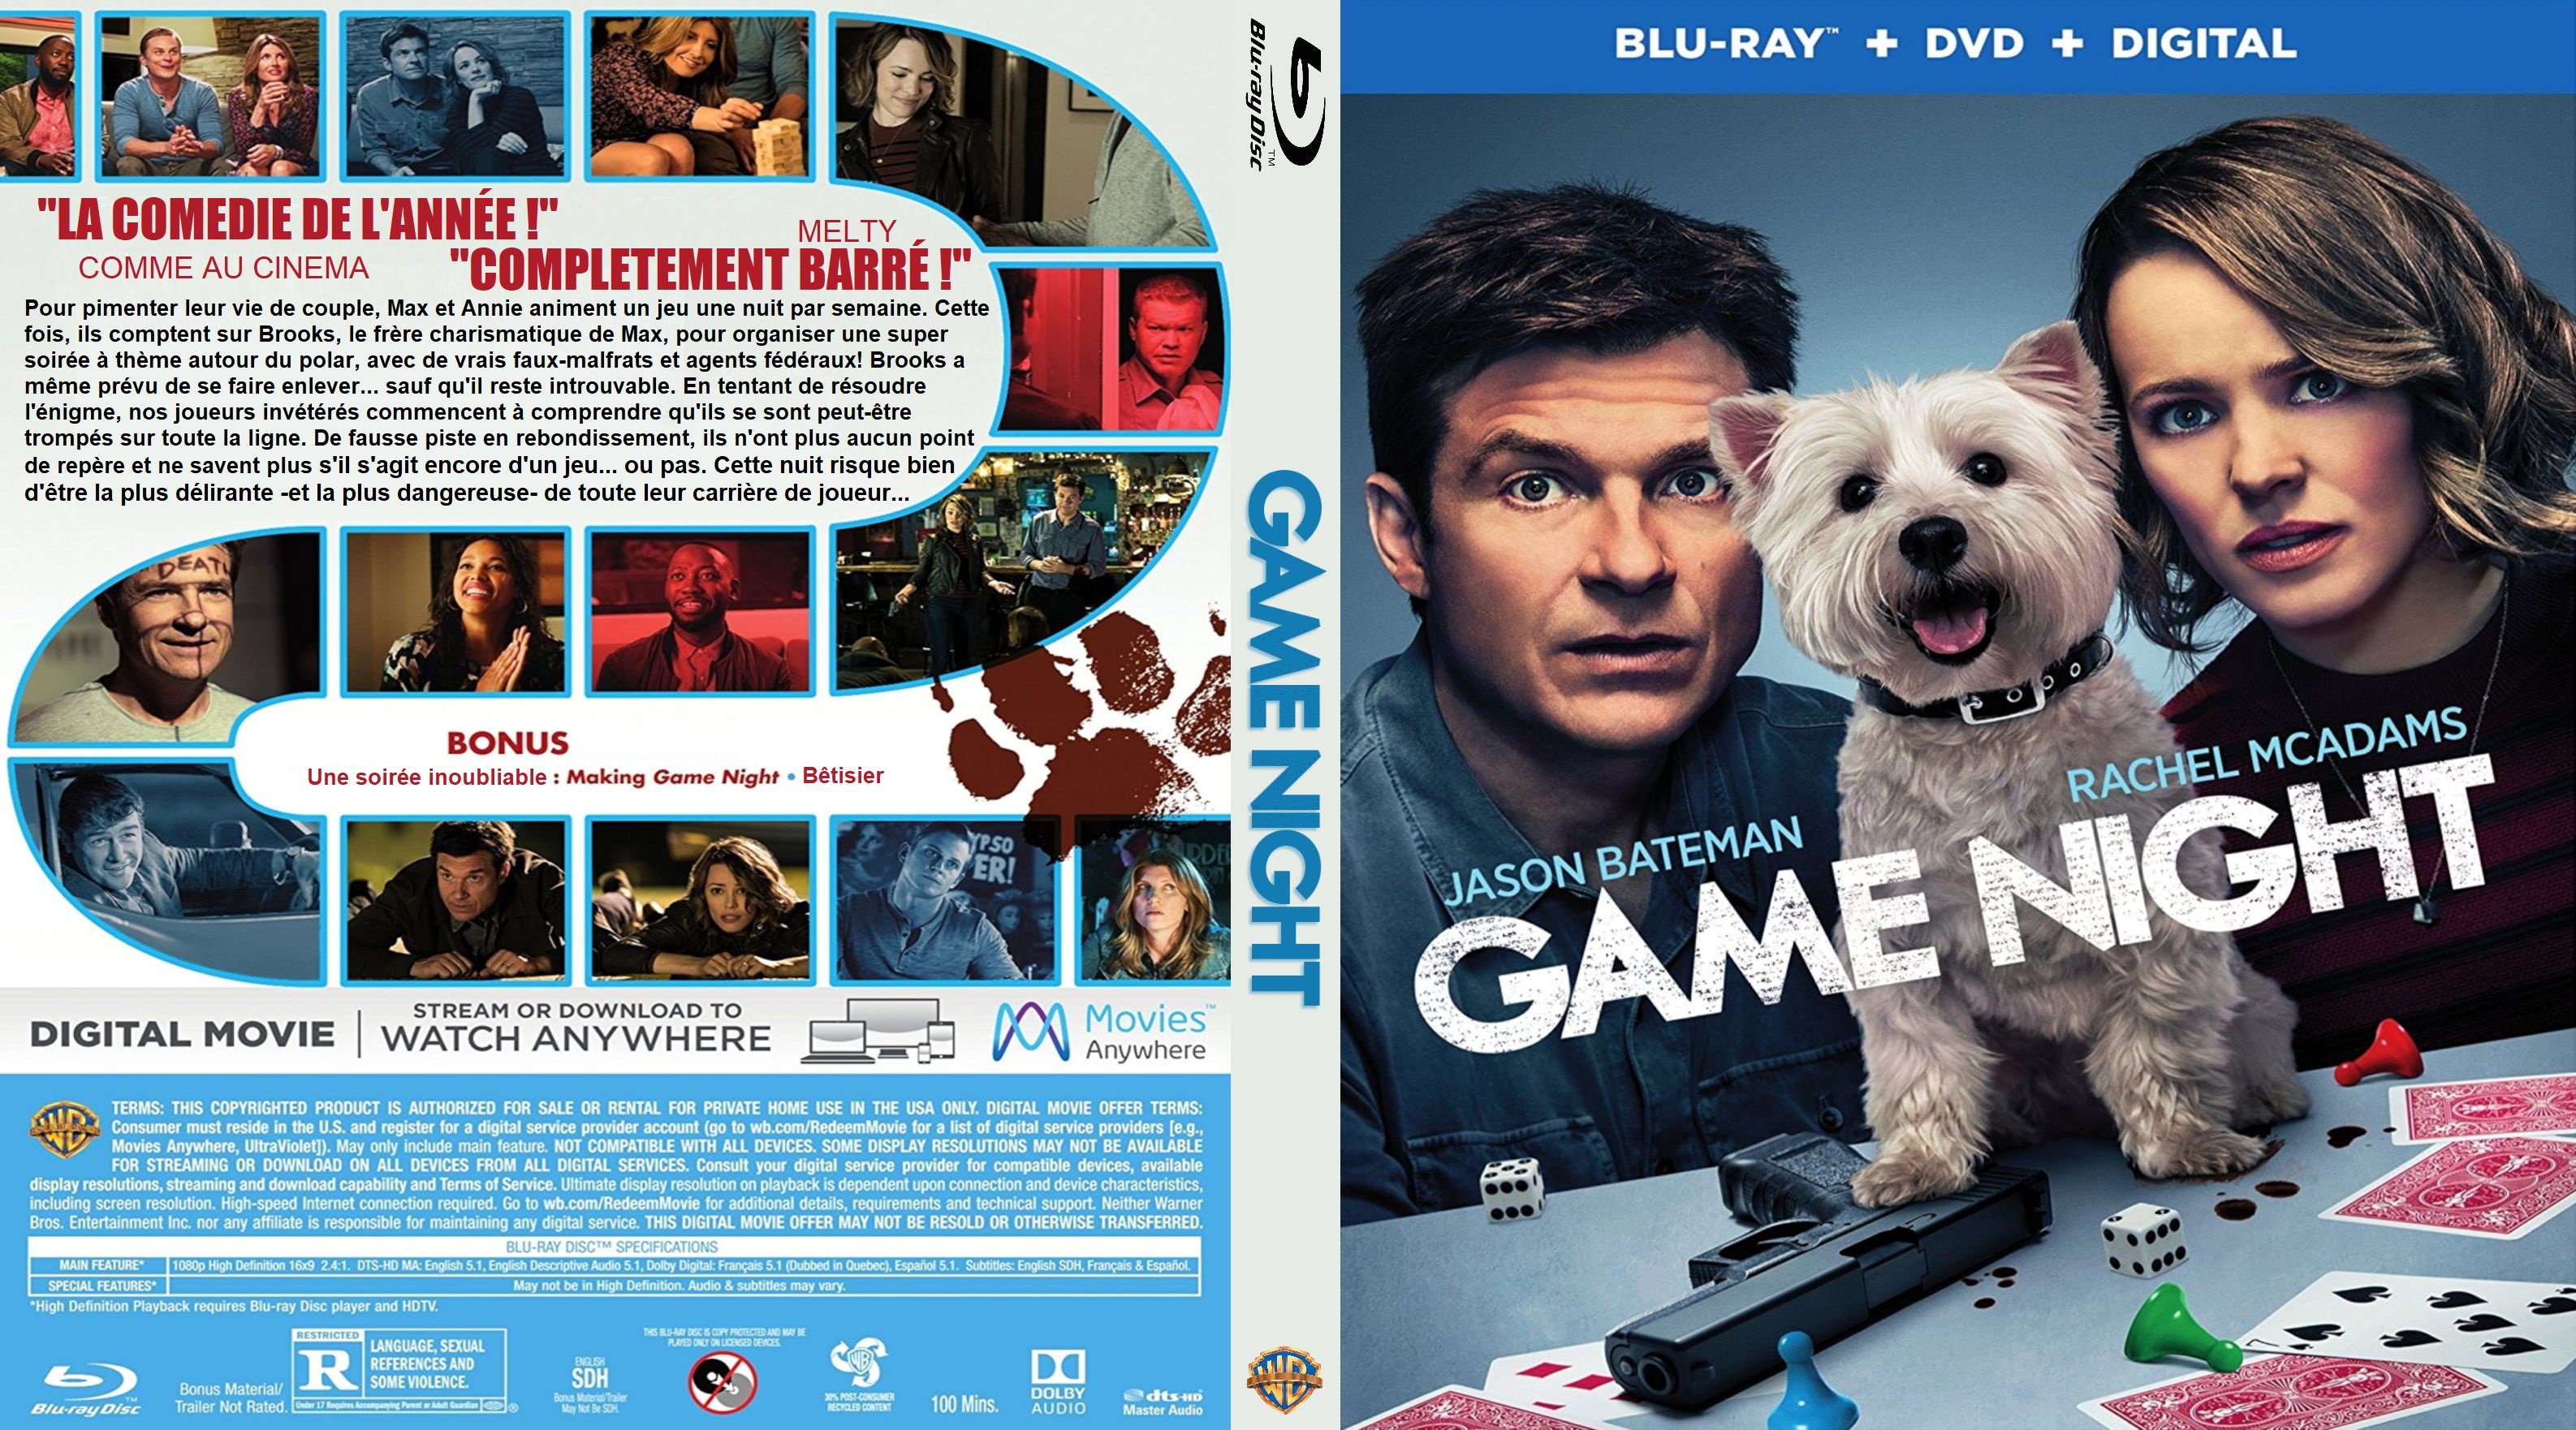 Jaquette DVD Game Night custom (BLU-RAY)